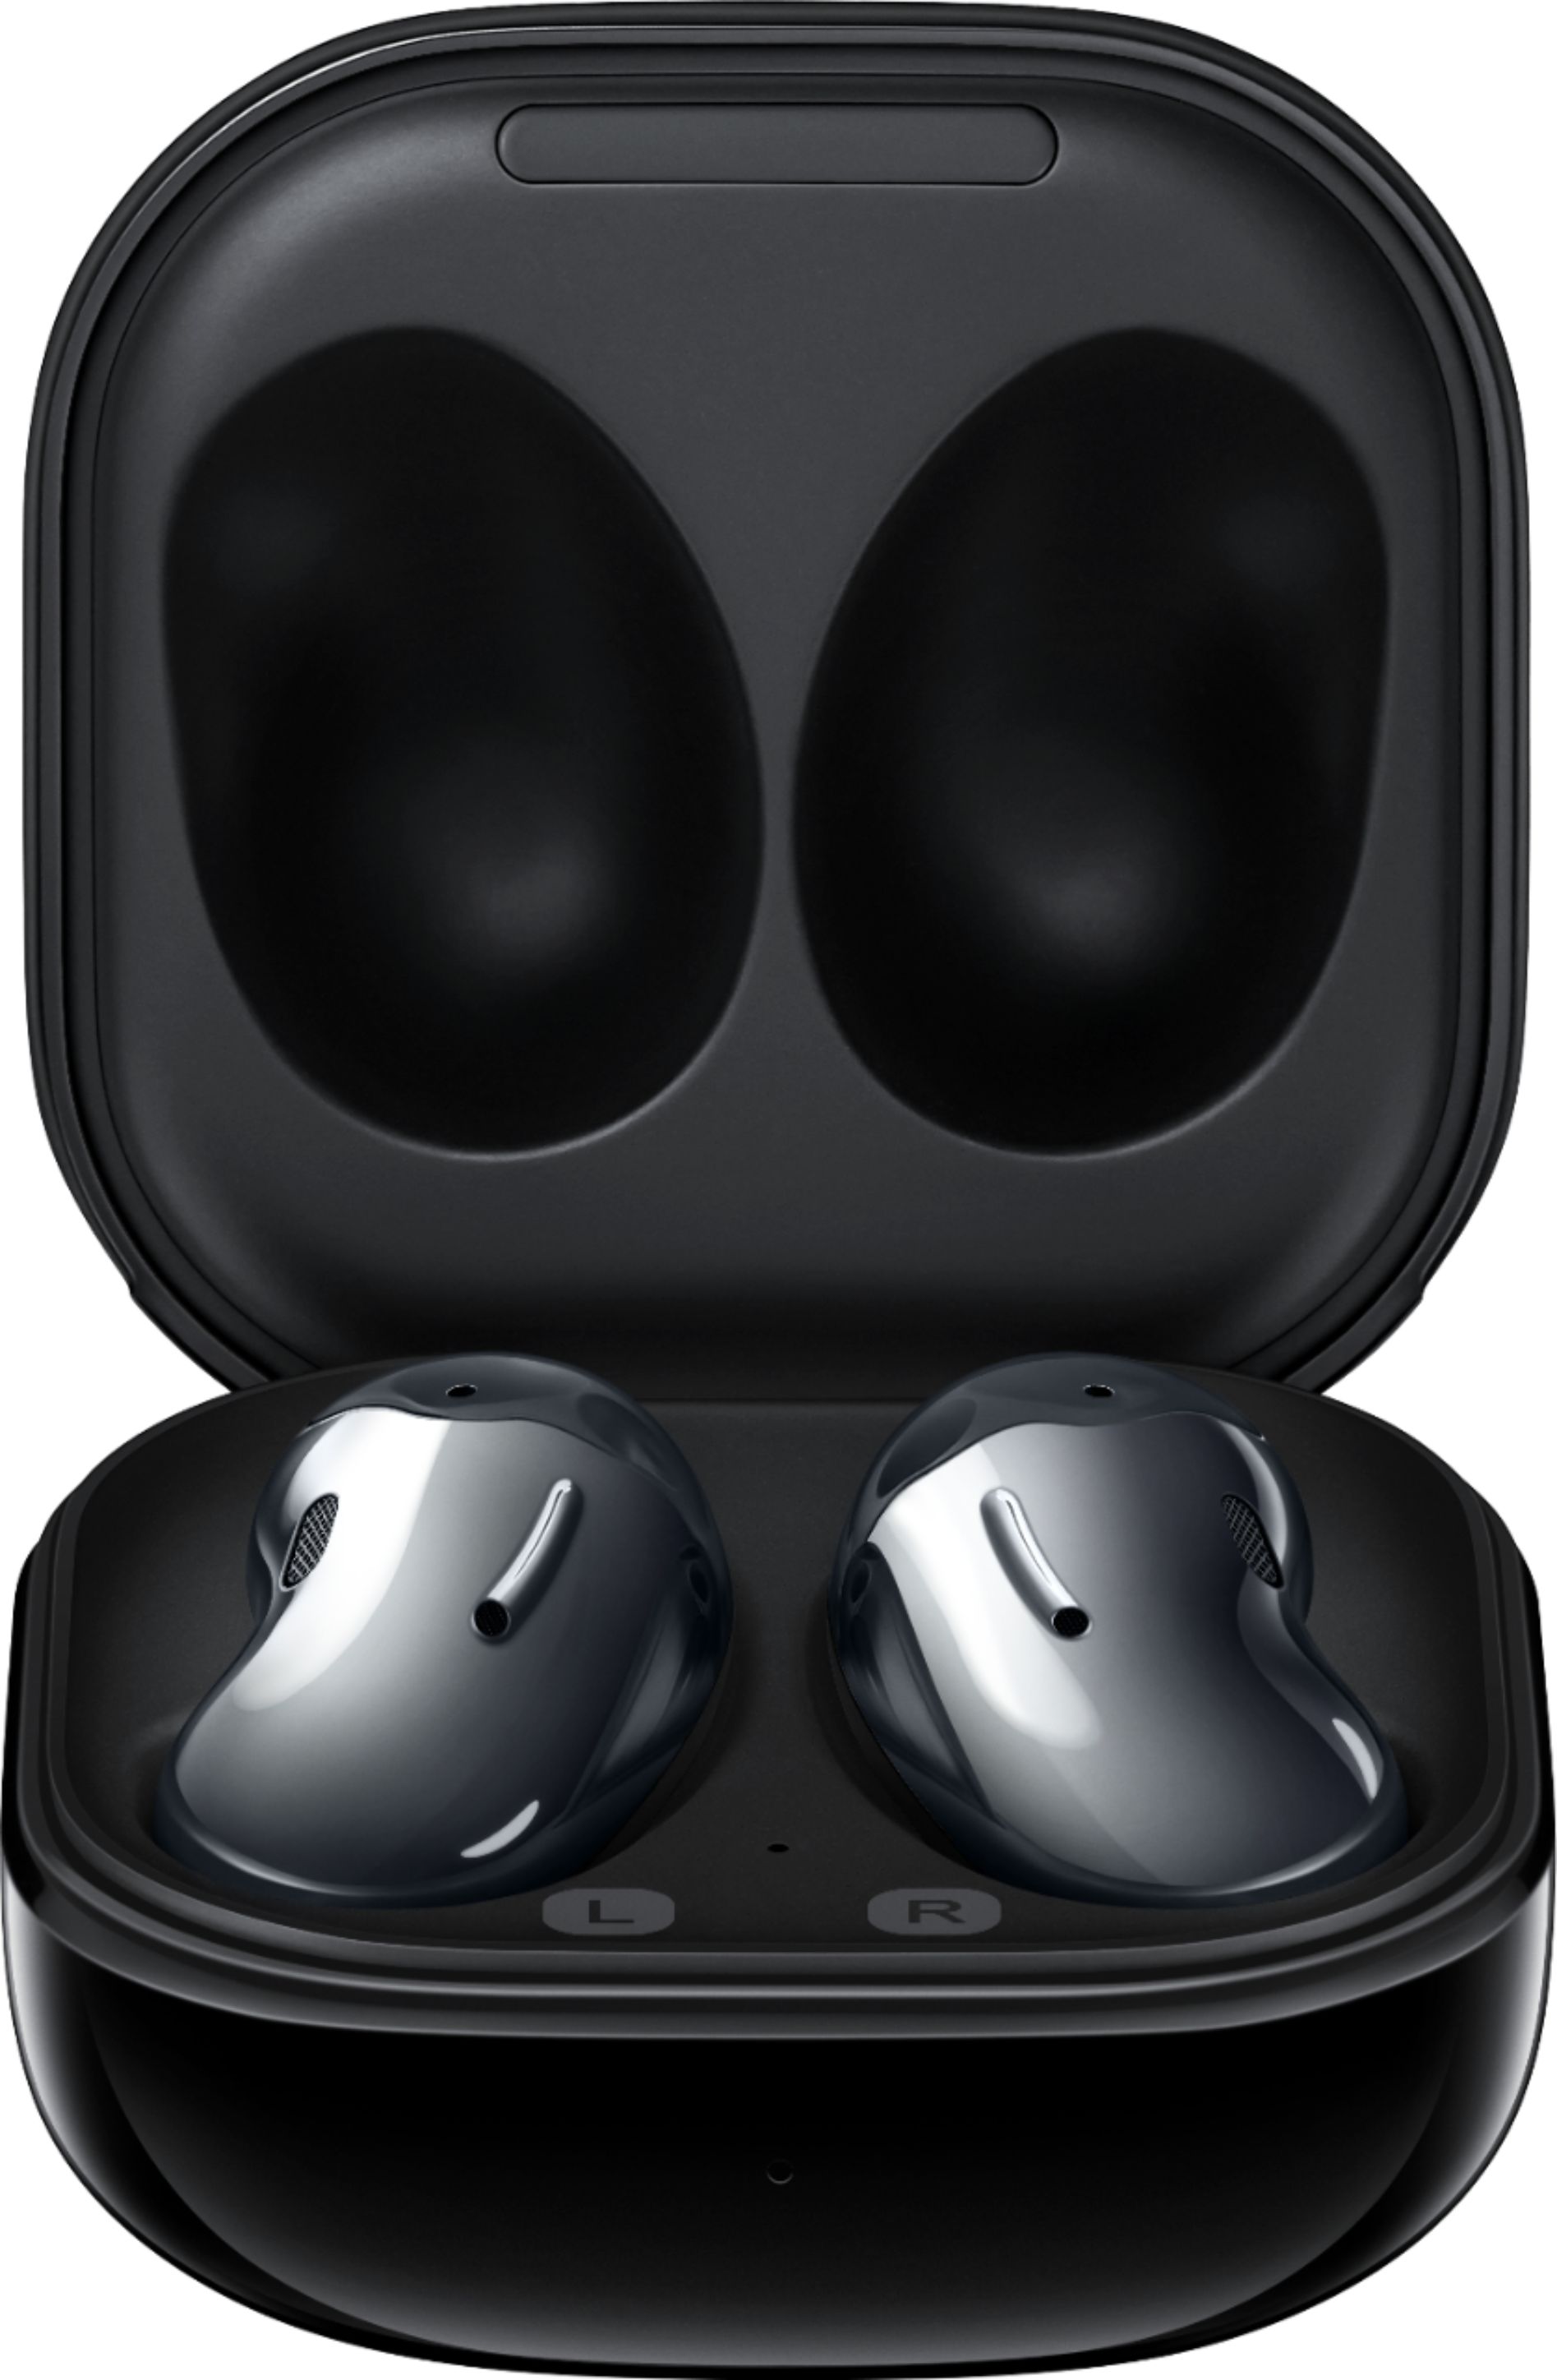 Samsung Galaxy Buds Live True Wireless Earbud Headphones Black Sm R180nzkaxar Best Buy